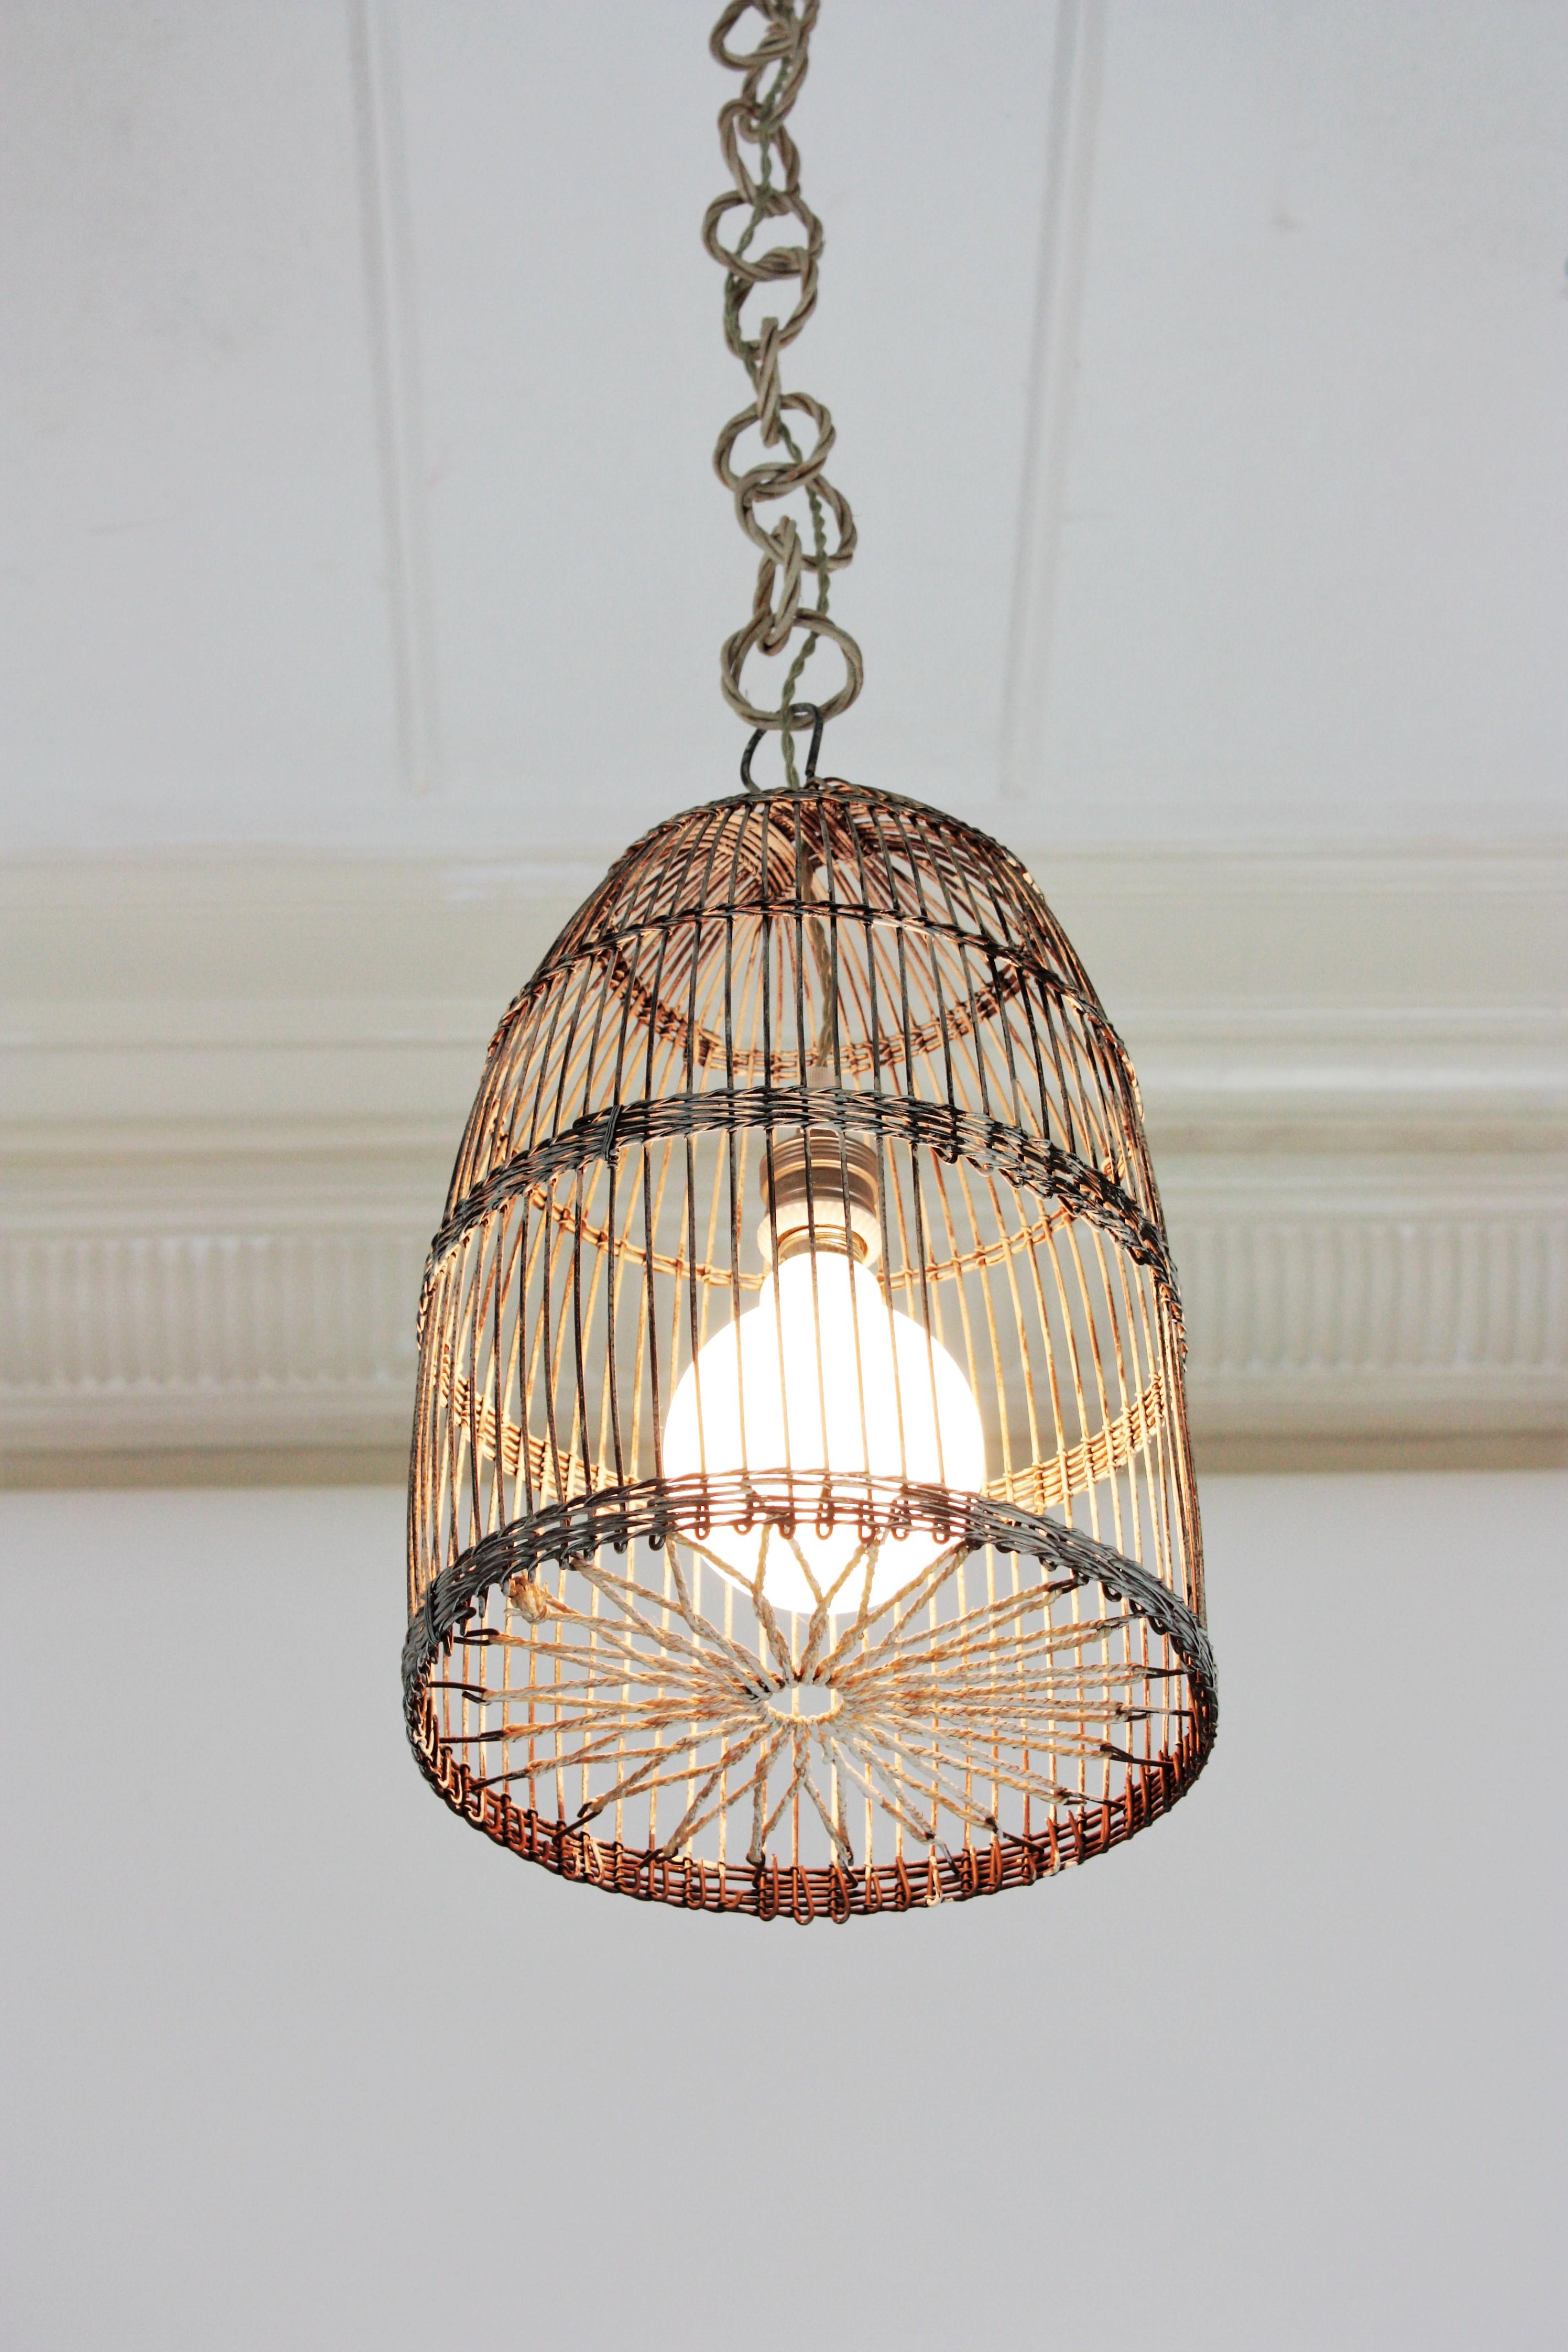 Birdcage Rustic Hanging Light Pendant Lamp 4